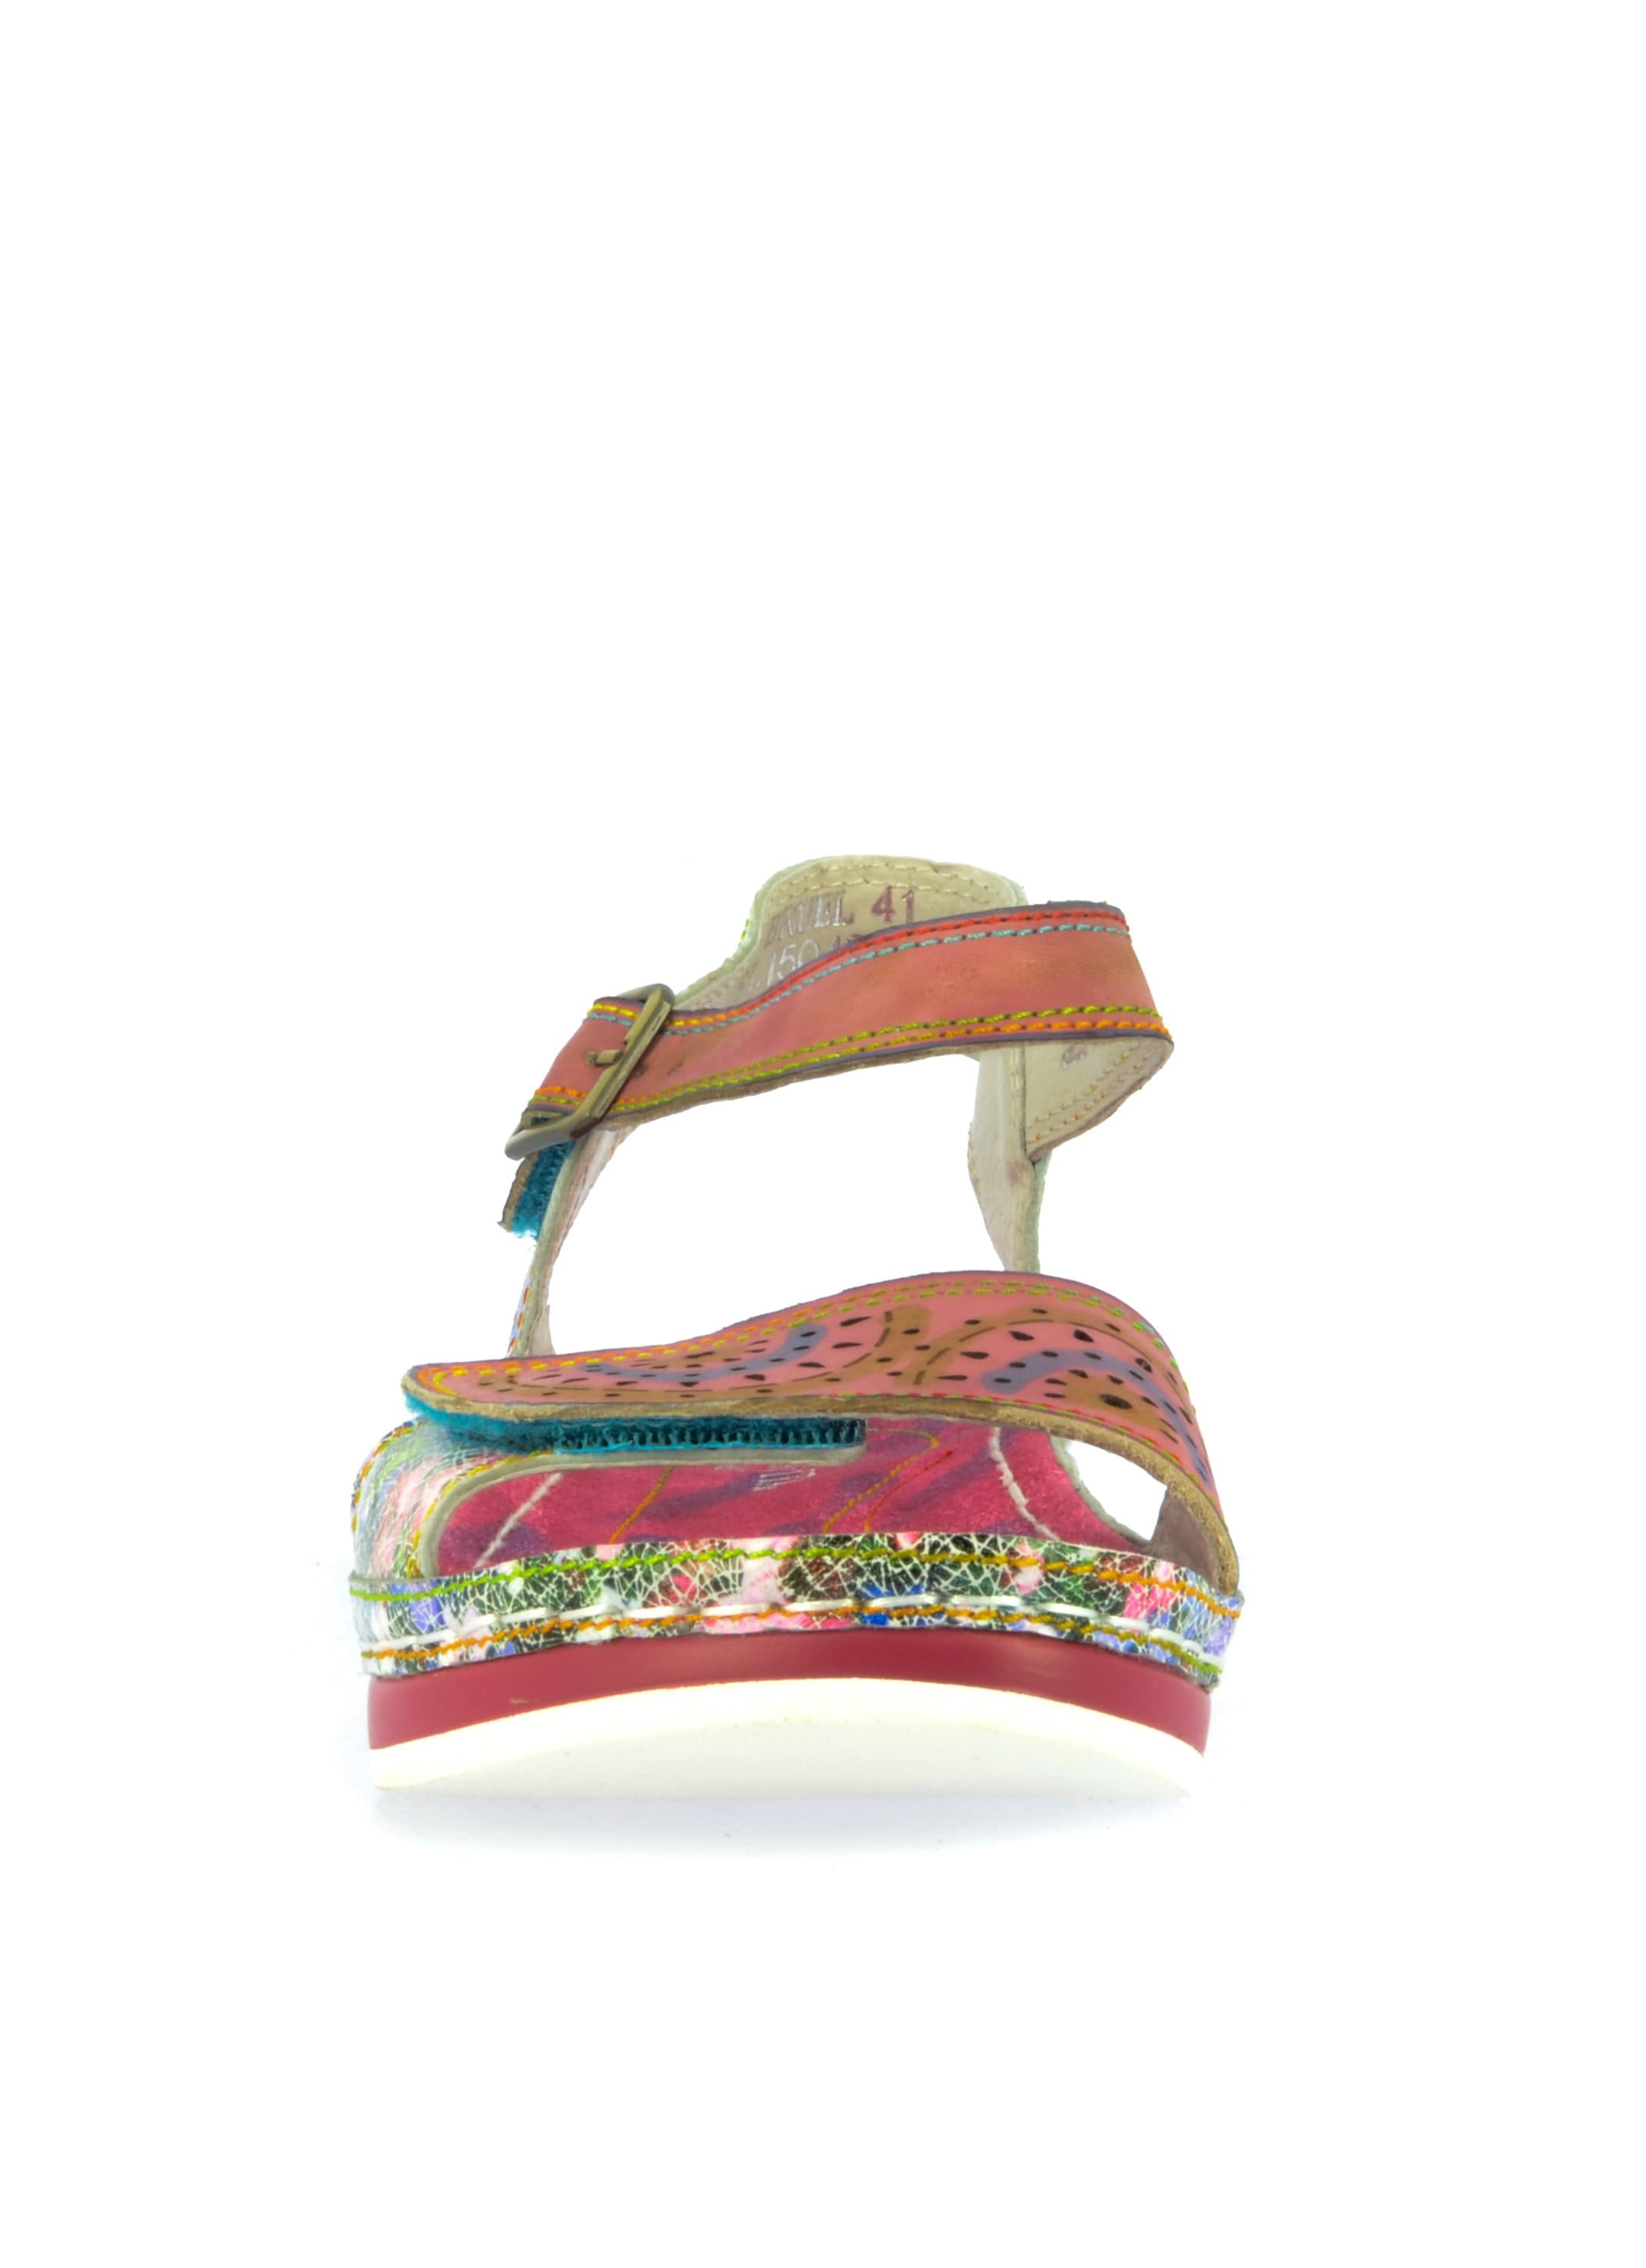 Chaussure BRCUELO41 - Sandale